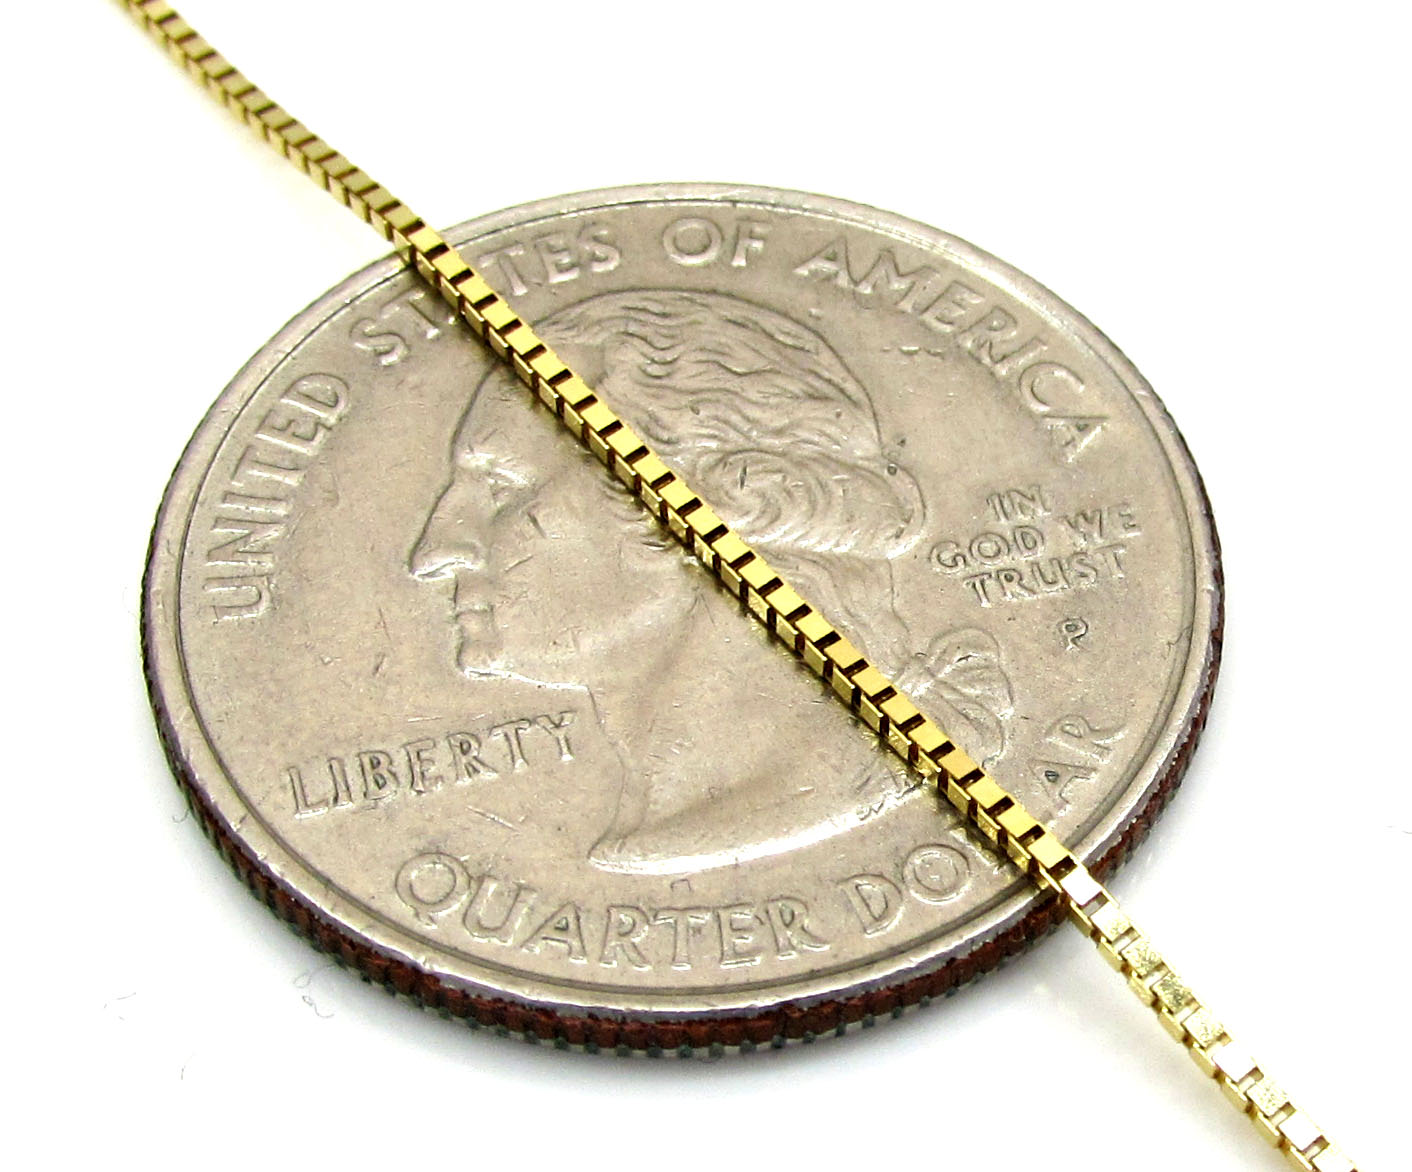 10k yellow gold skinny box link chain 16-24 inch 1.0mm